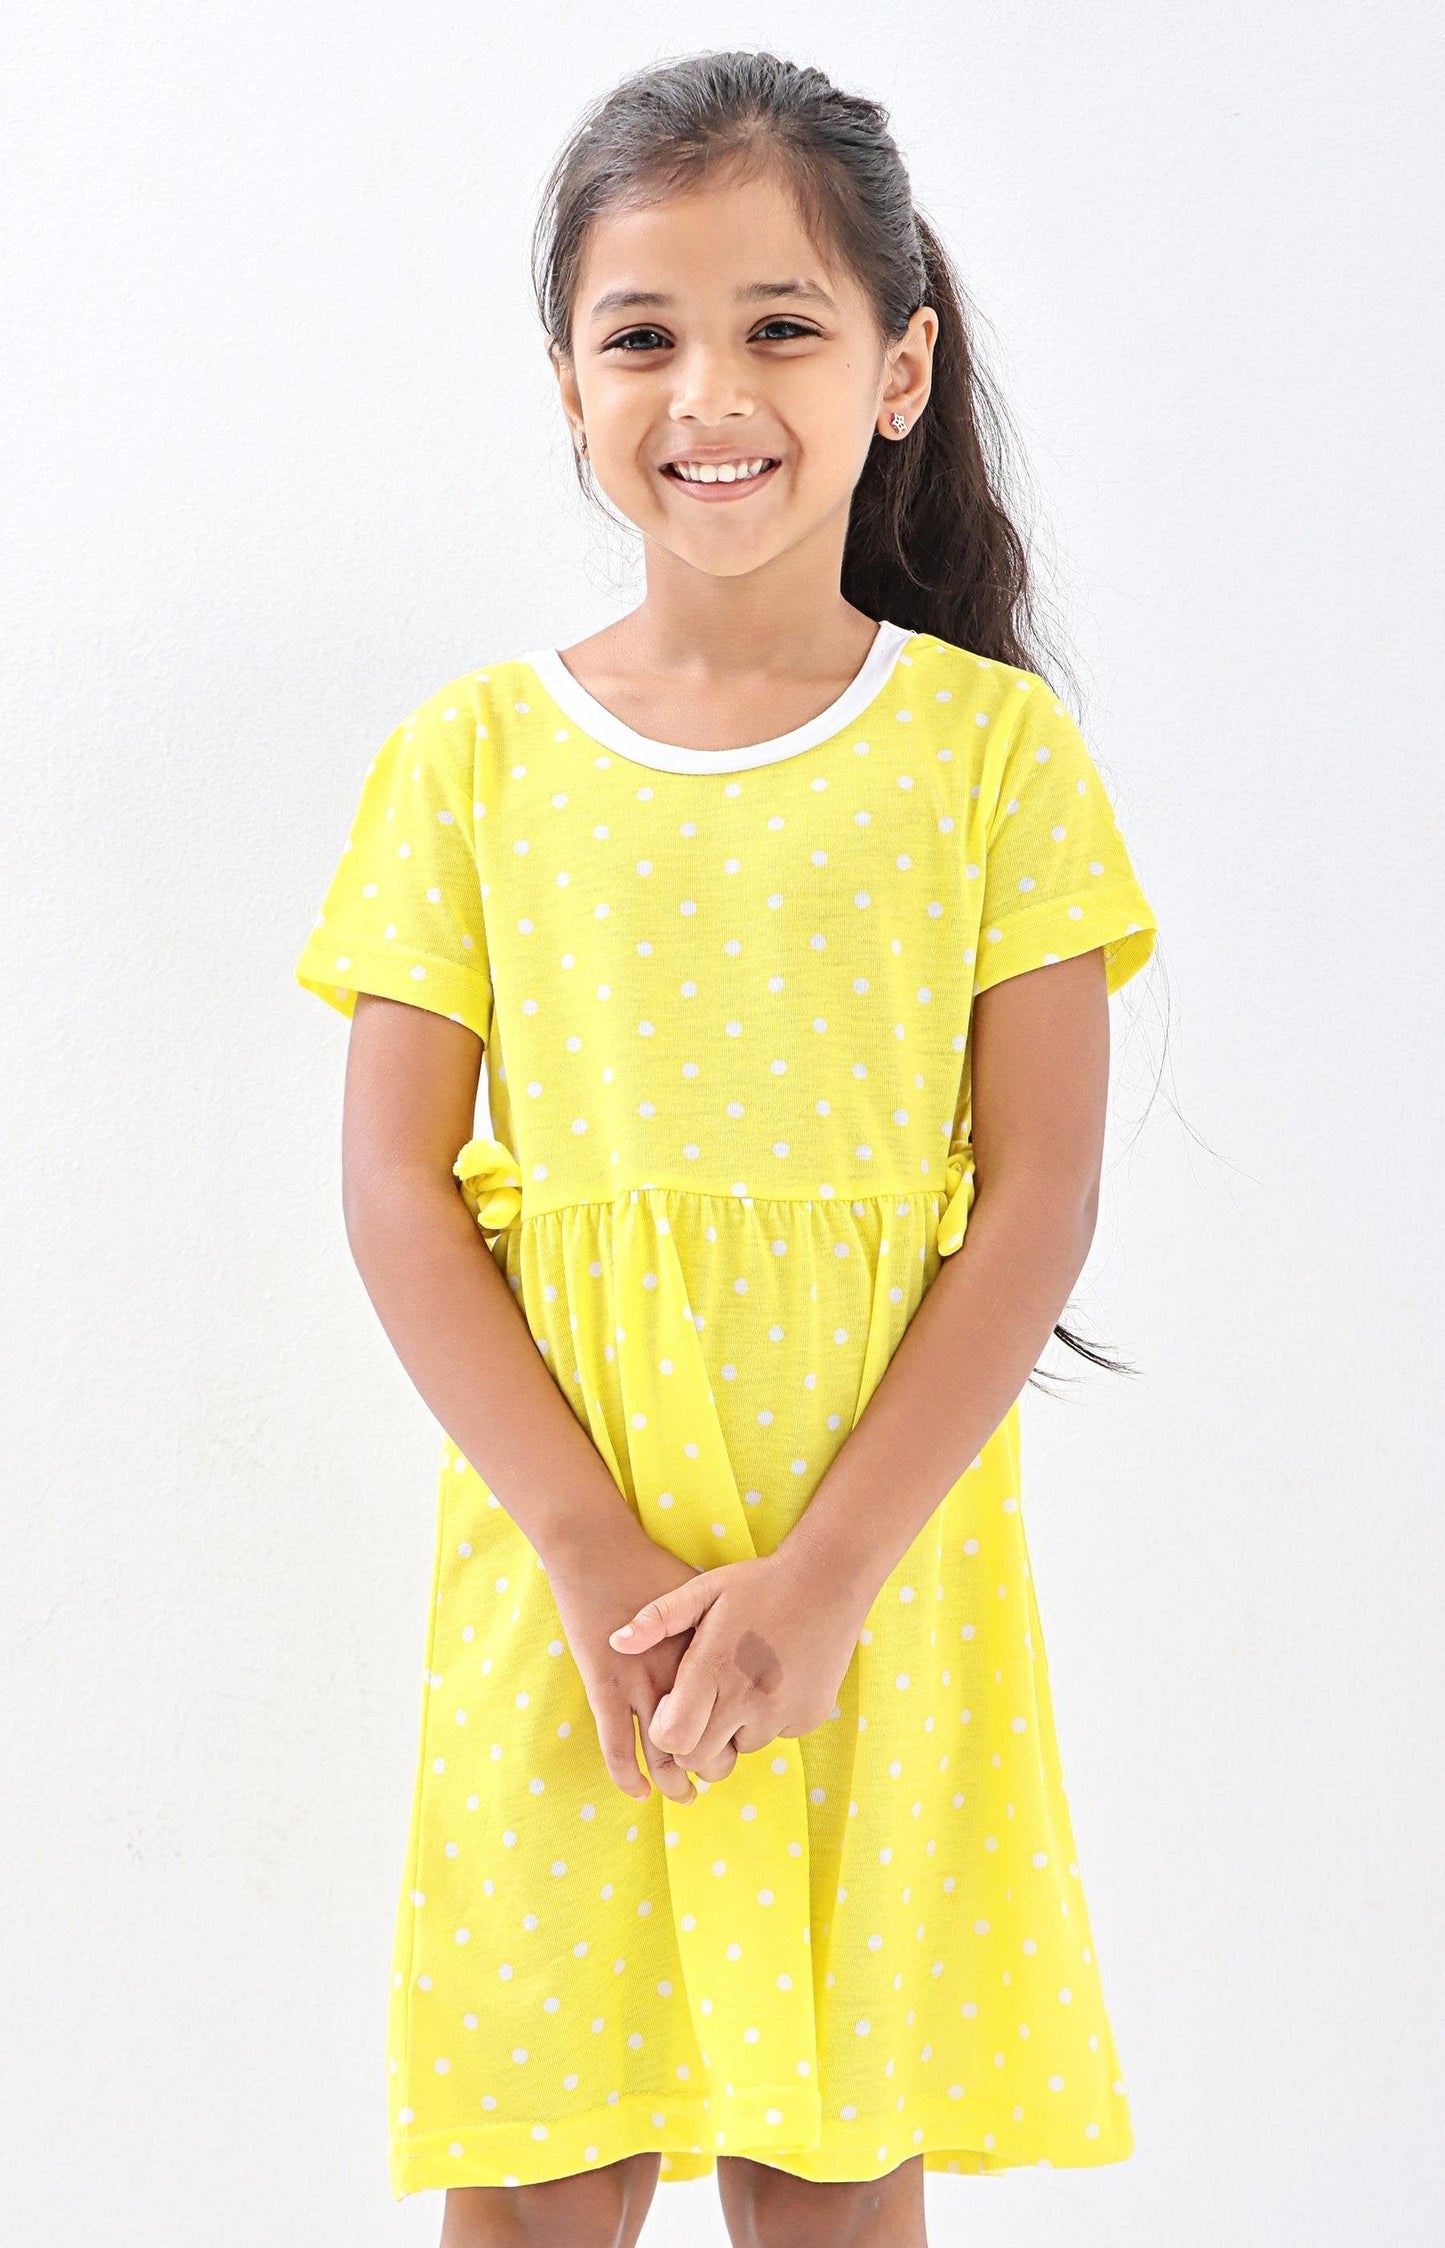 Girls Polka Dot Dress - Yellow